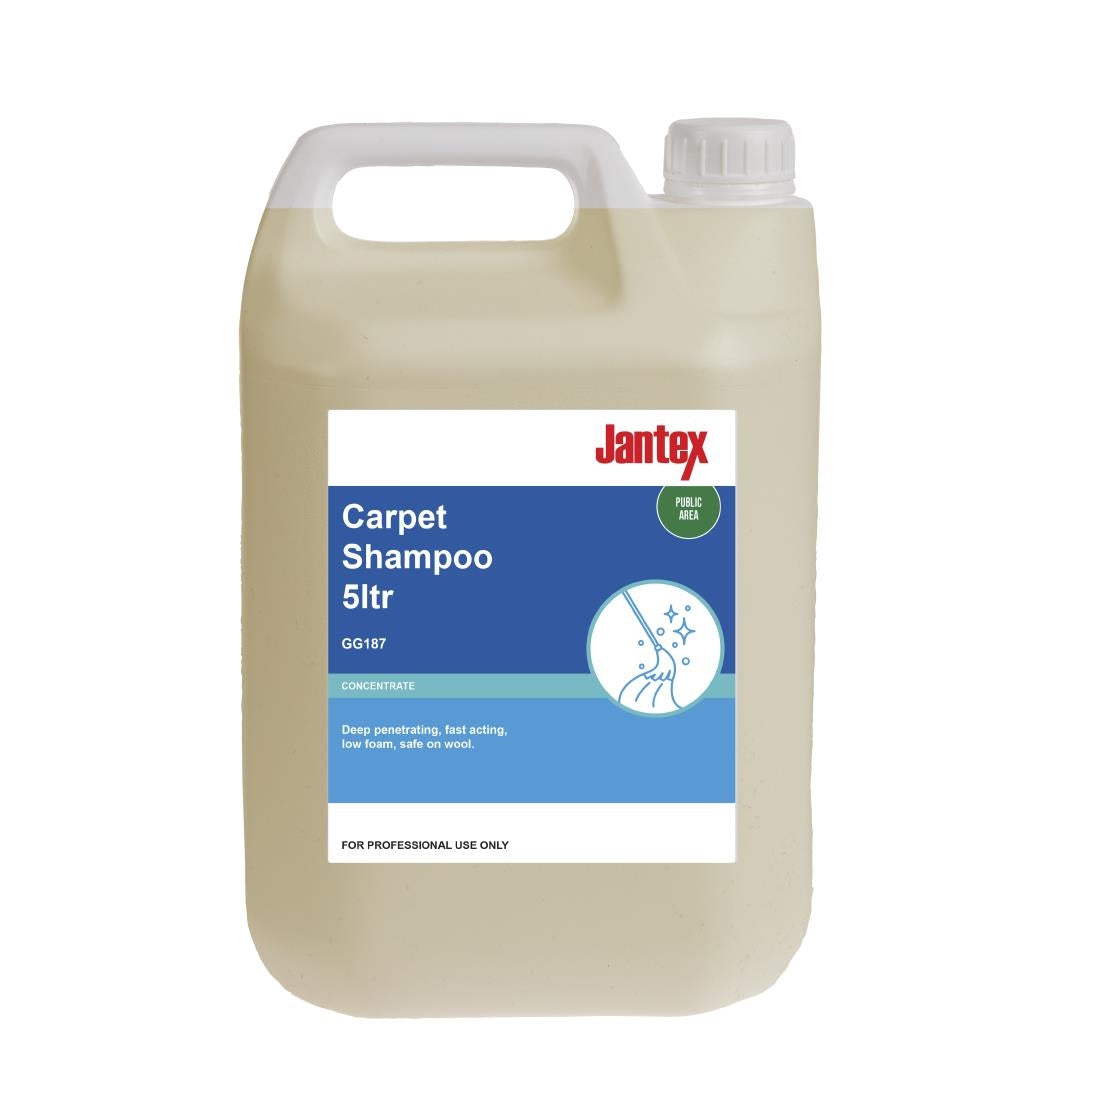 GG187 Jantex Carpet Shampoo Concentrate 5Ltr JD Catering Equipment Solutions Ltd